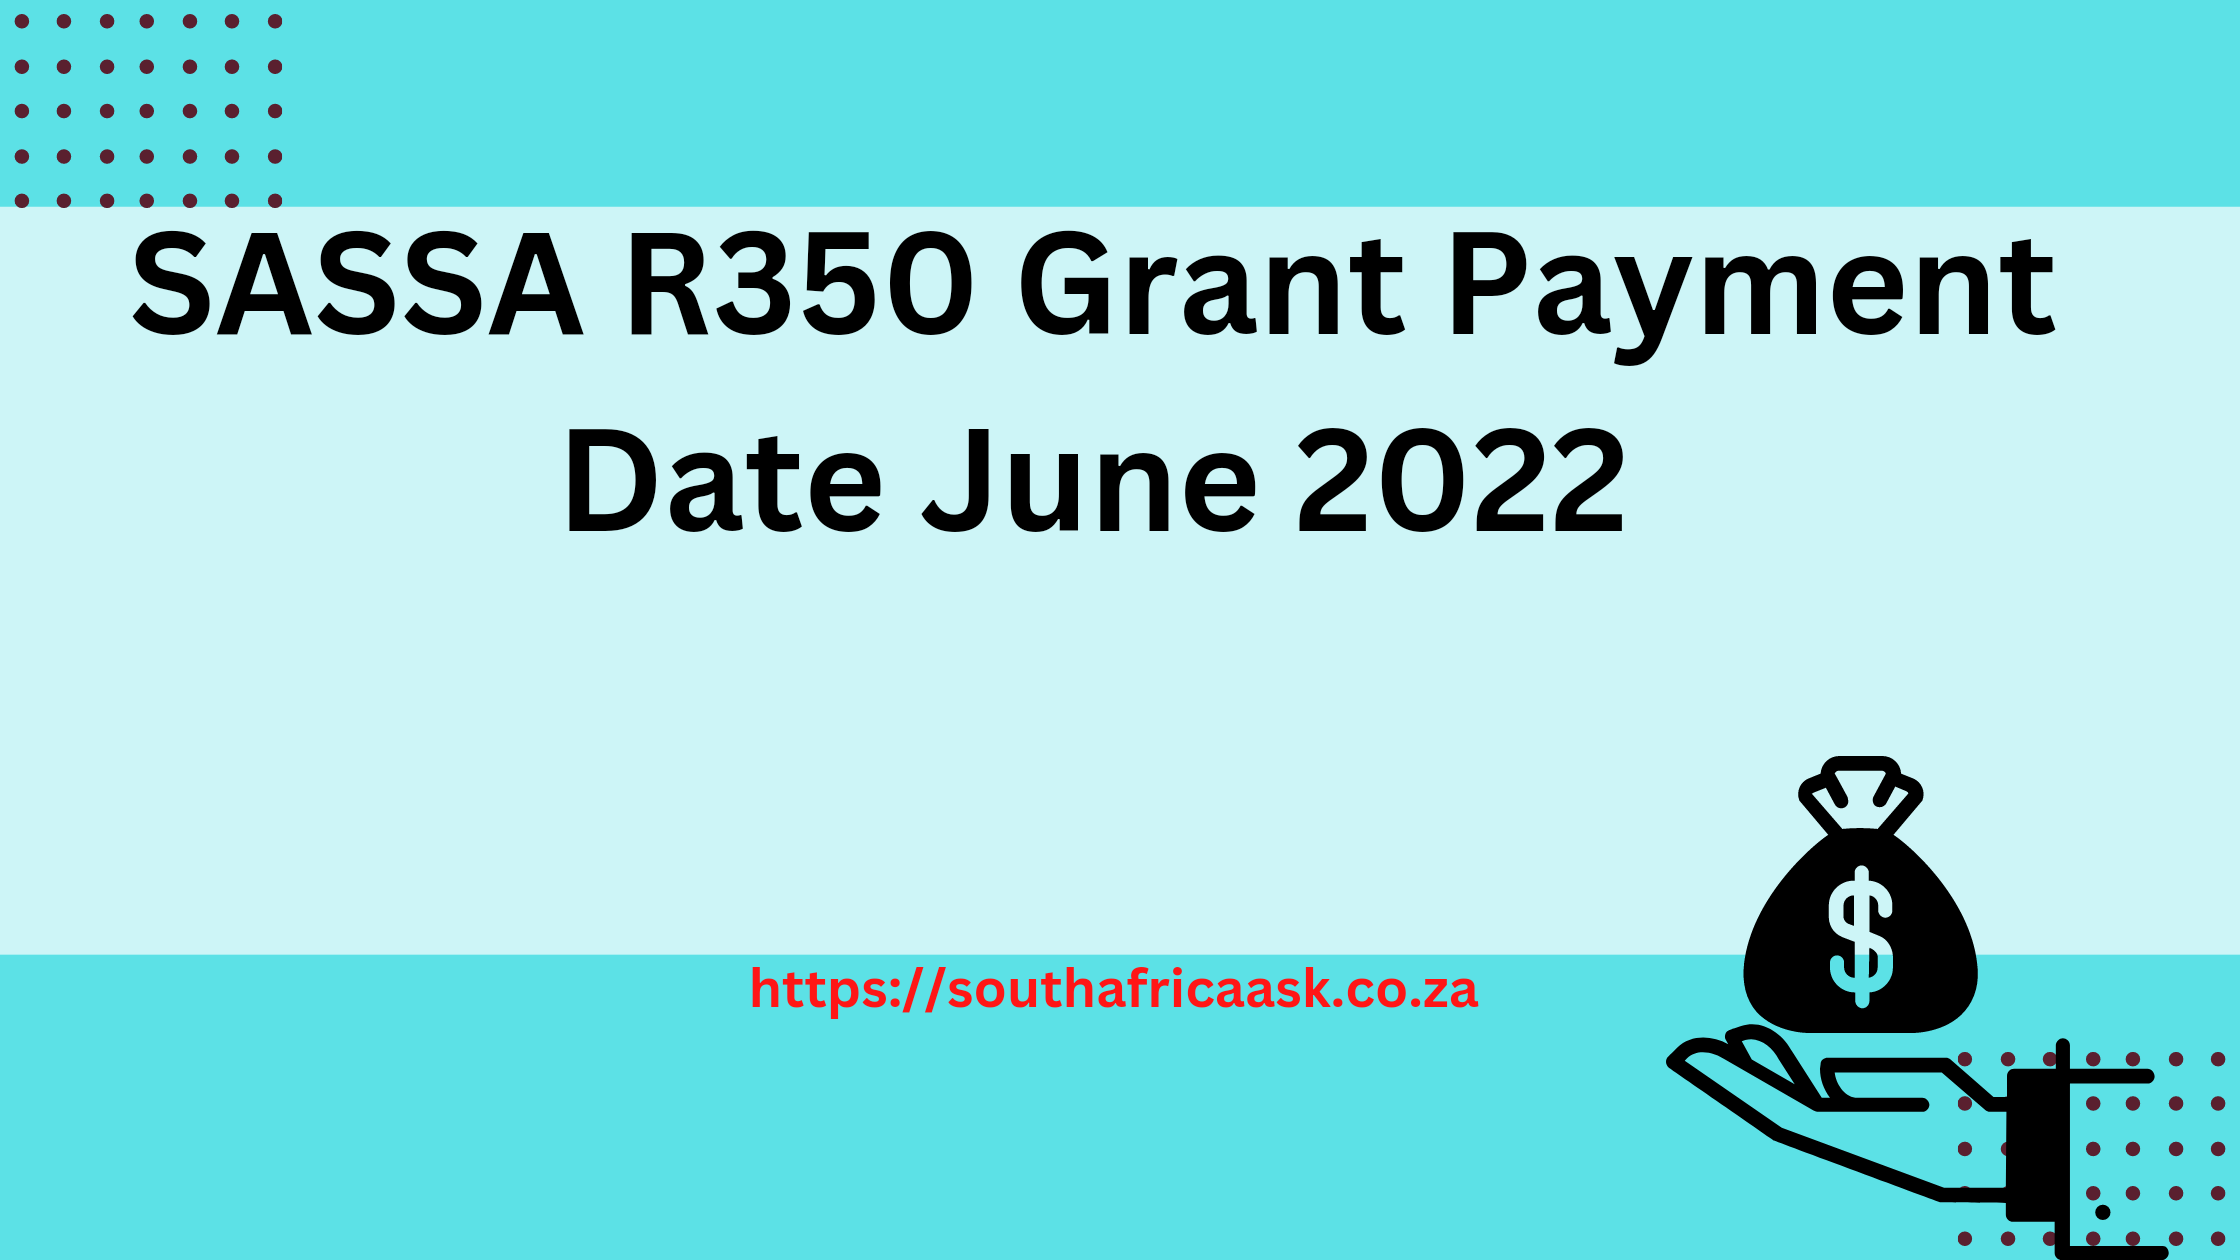 SASSA R350 Grant Payment Date June 2022